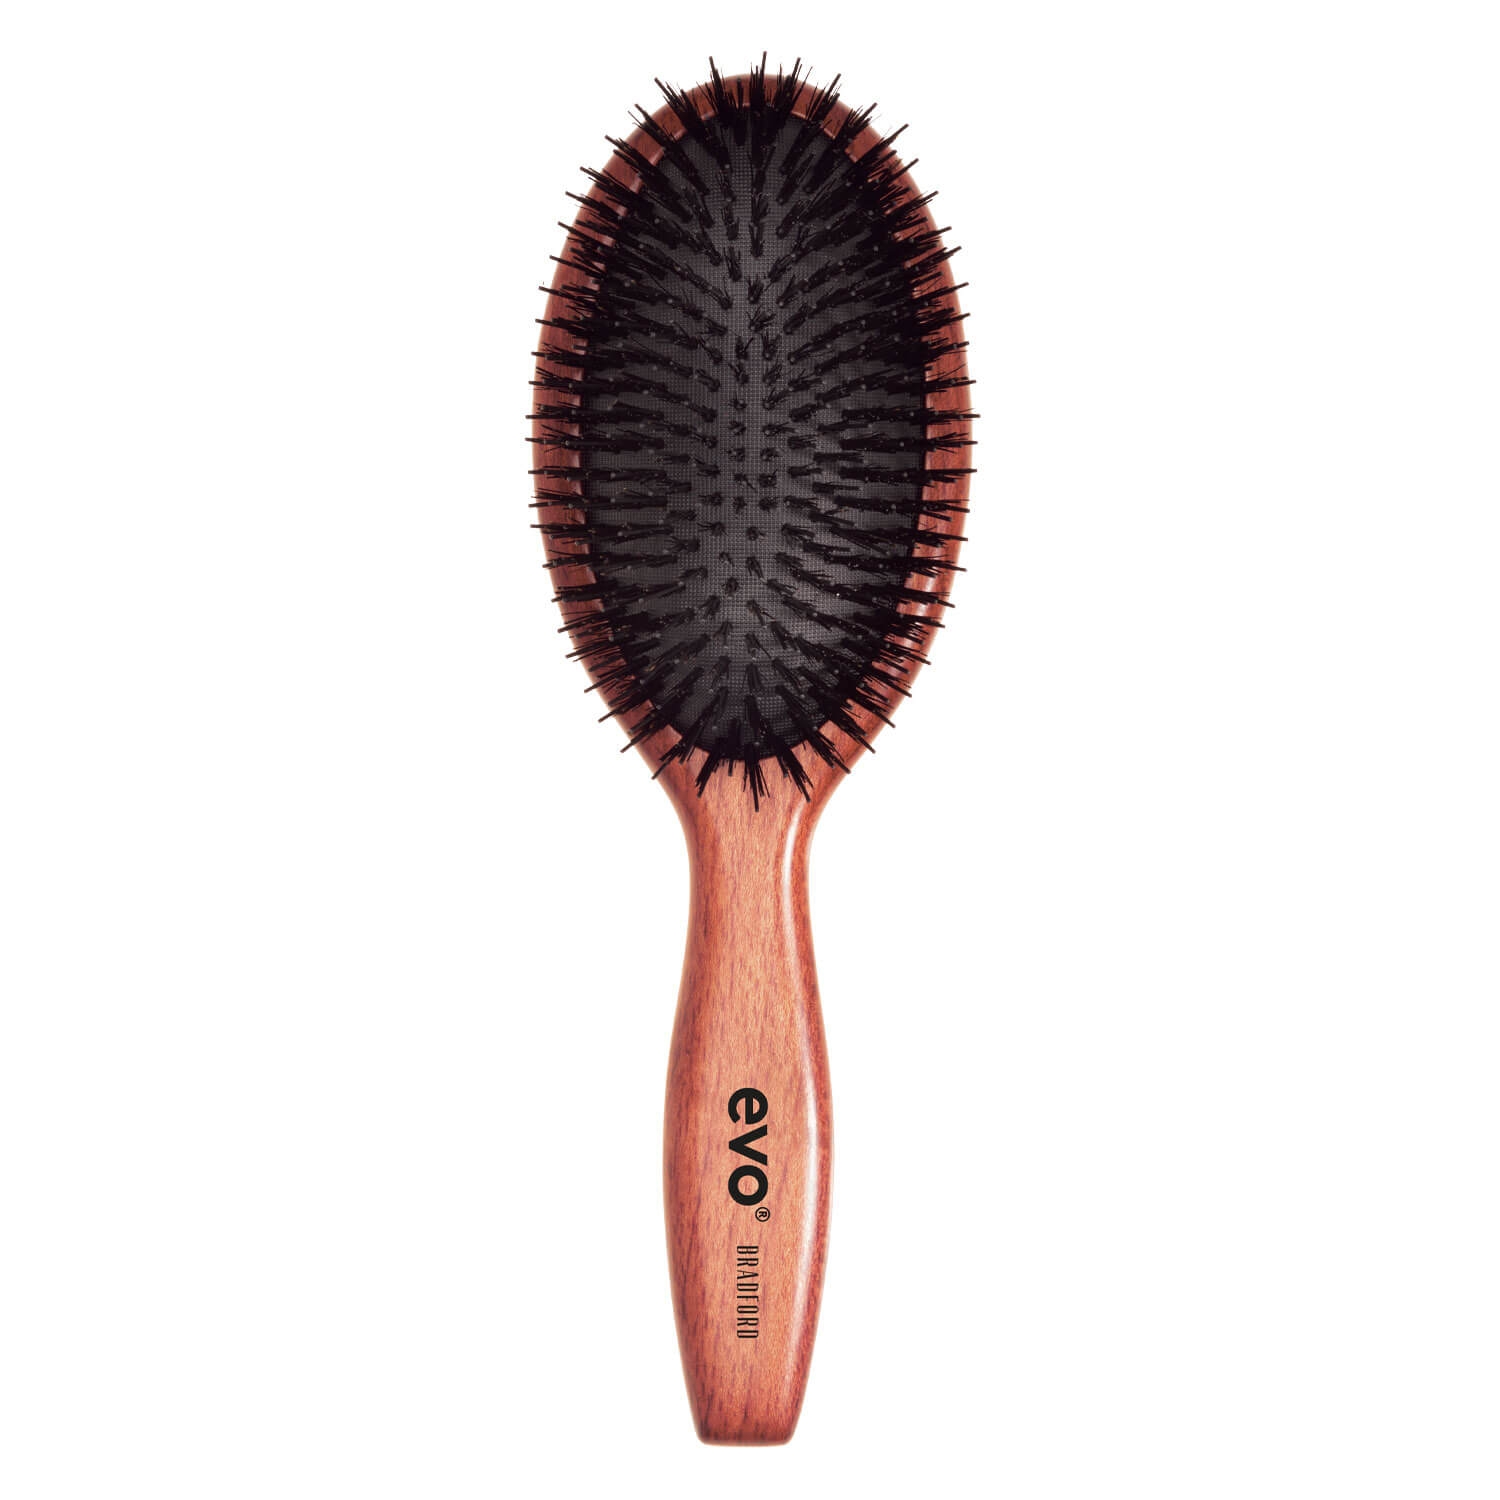 Product image from evo brushes - bradford pin bristle brush